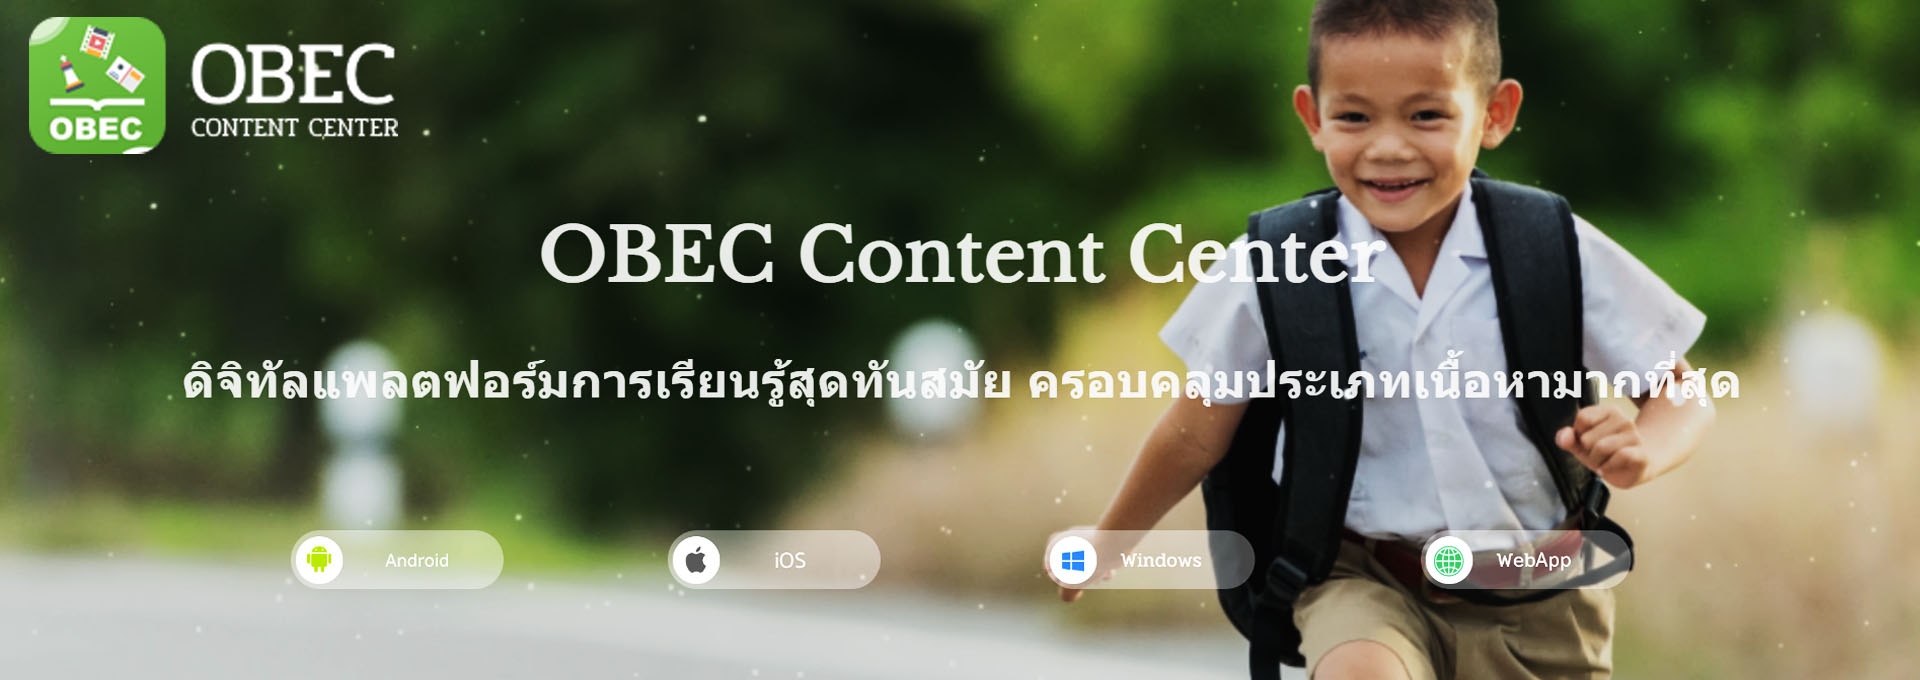 OBEC Content Center